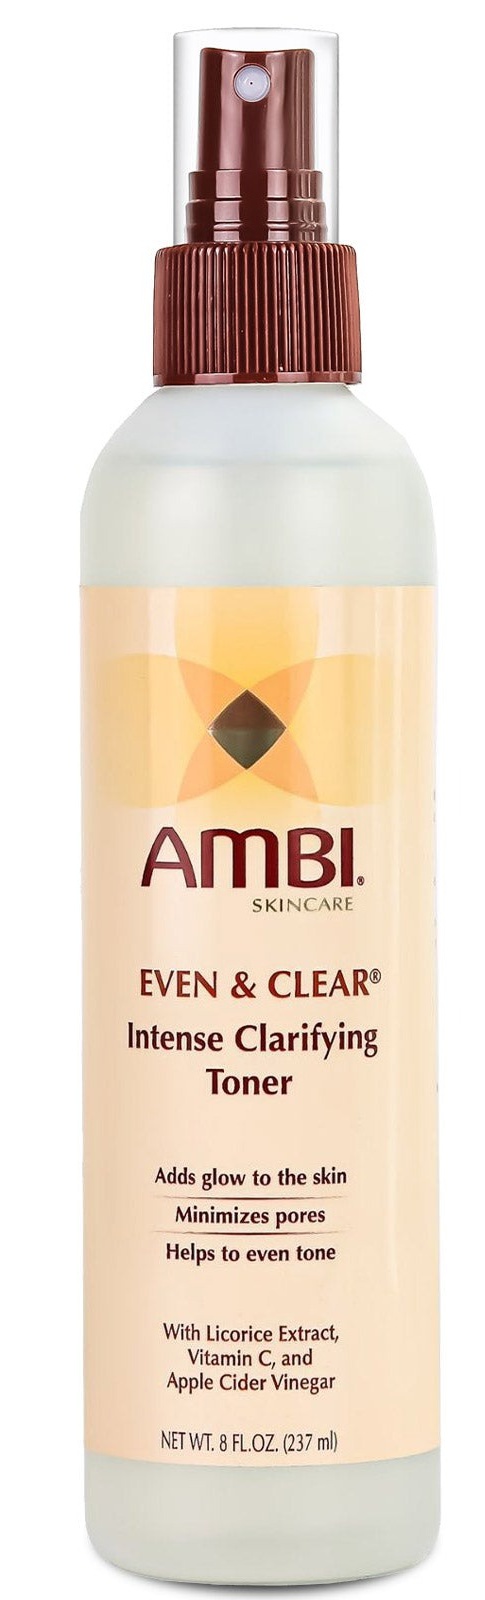 AMBI Even & Clear® Intense Clarifying Toner